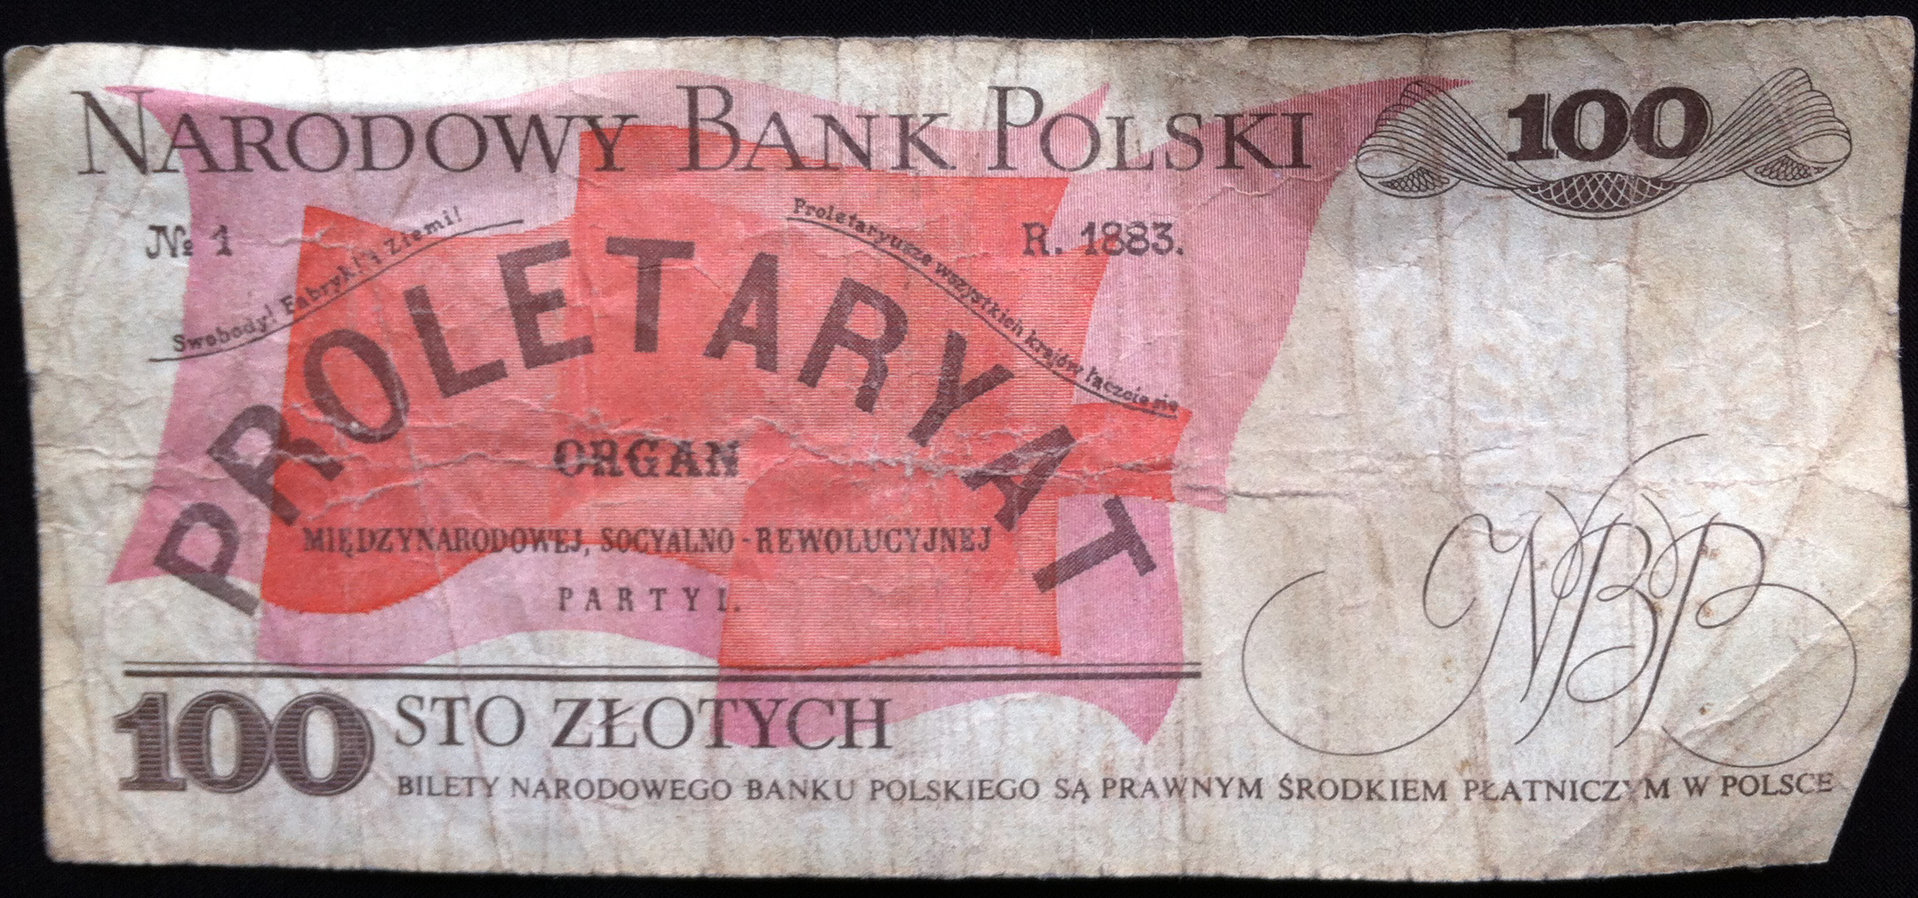 1988-Narodowy-Bank-Polski-100-Sto-Zlotych-Re_01.jpg